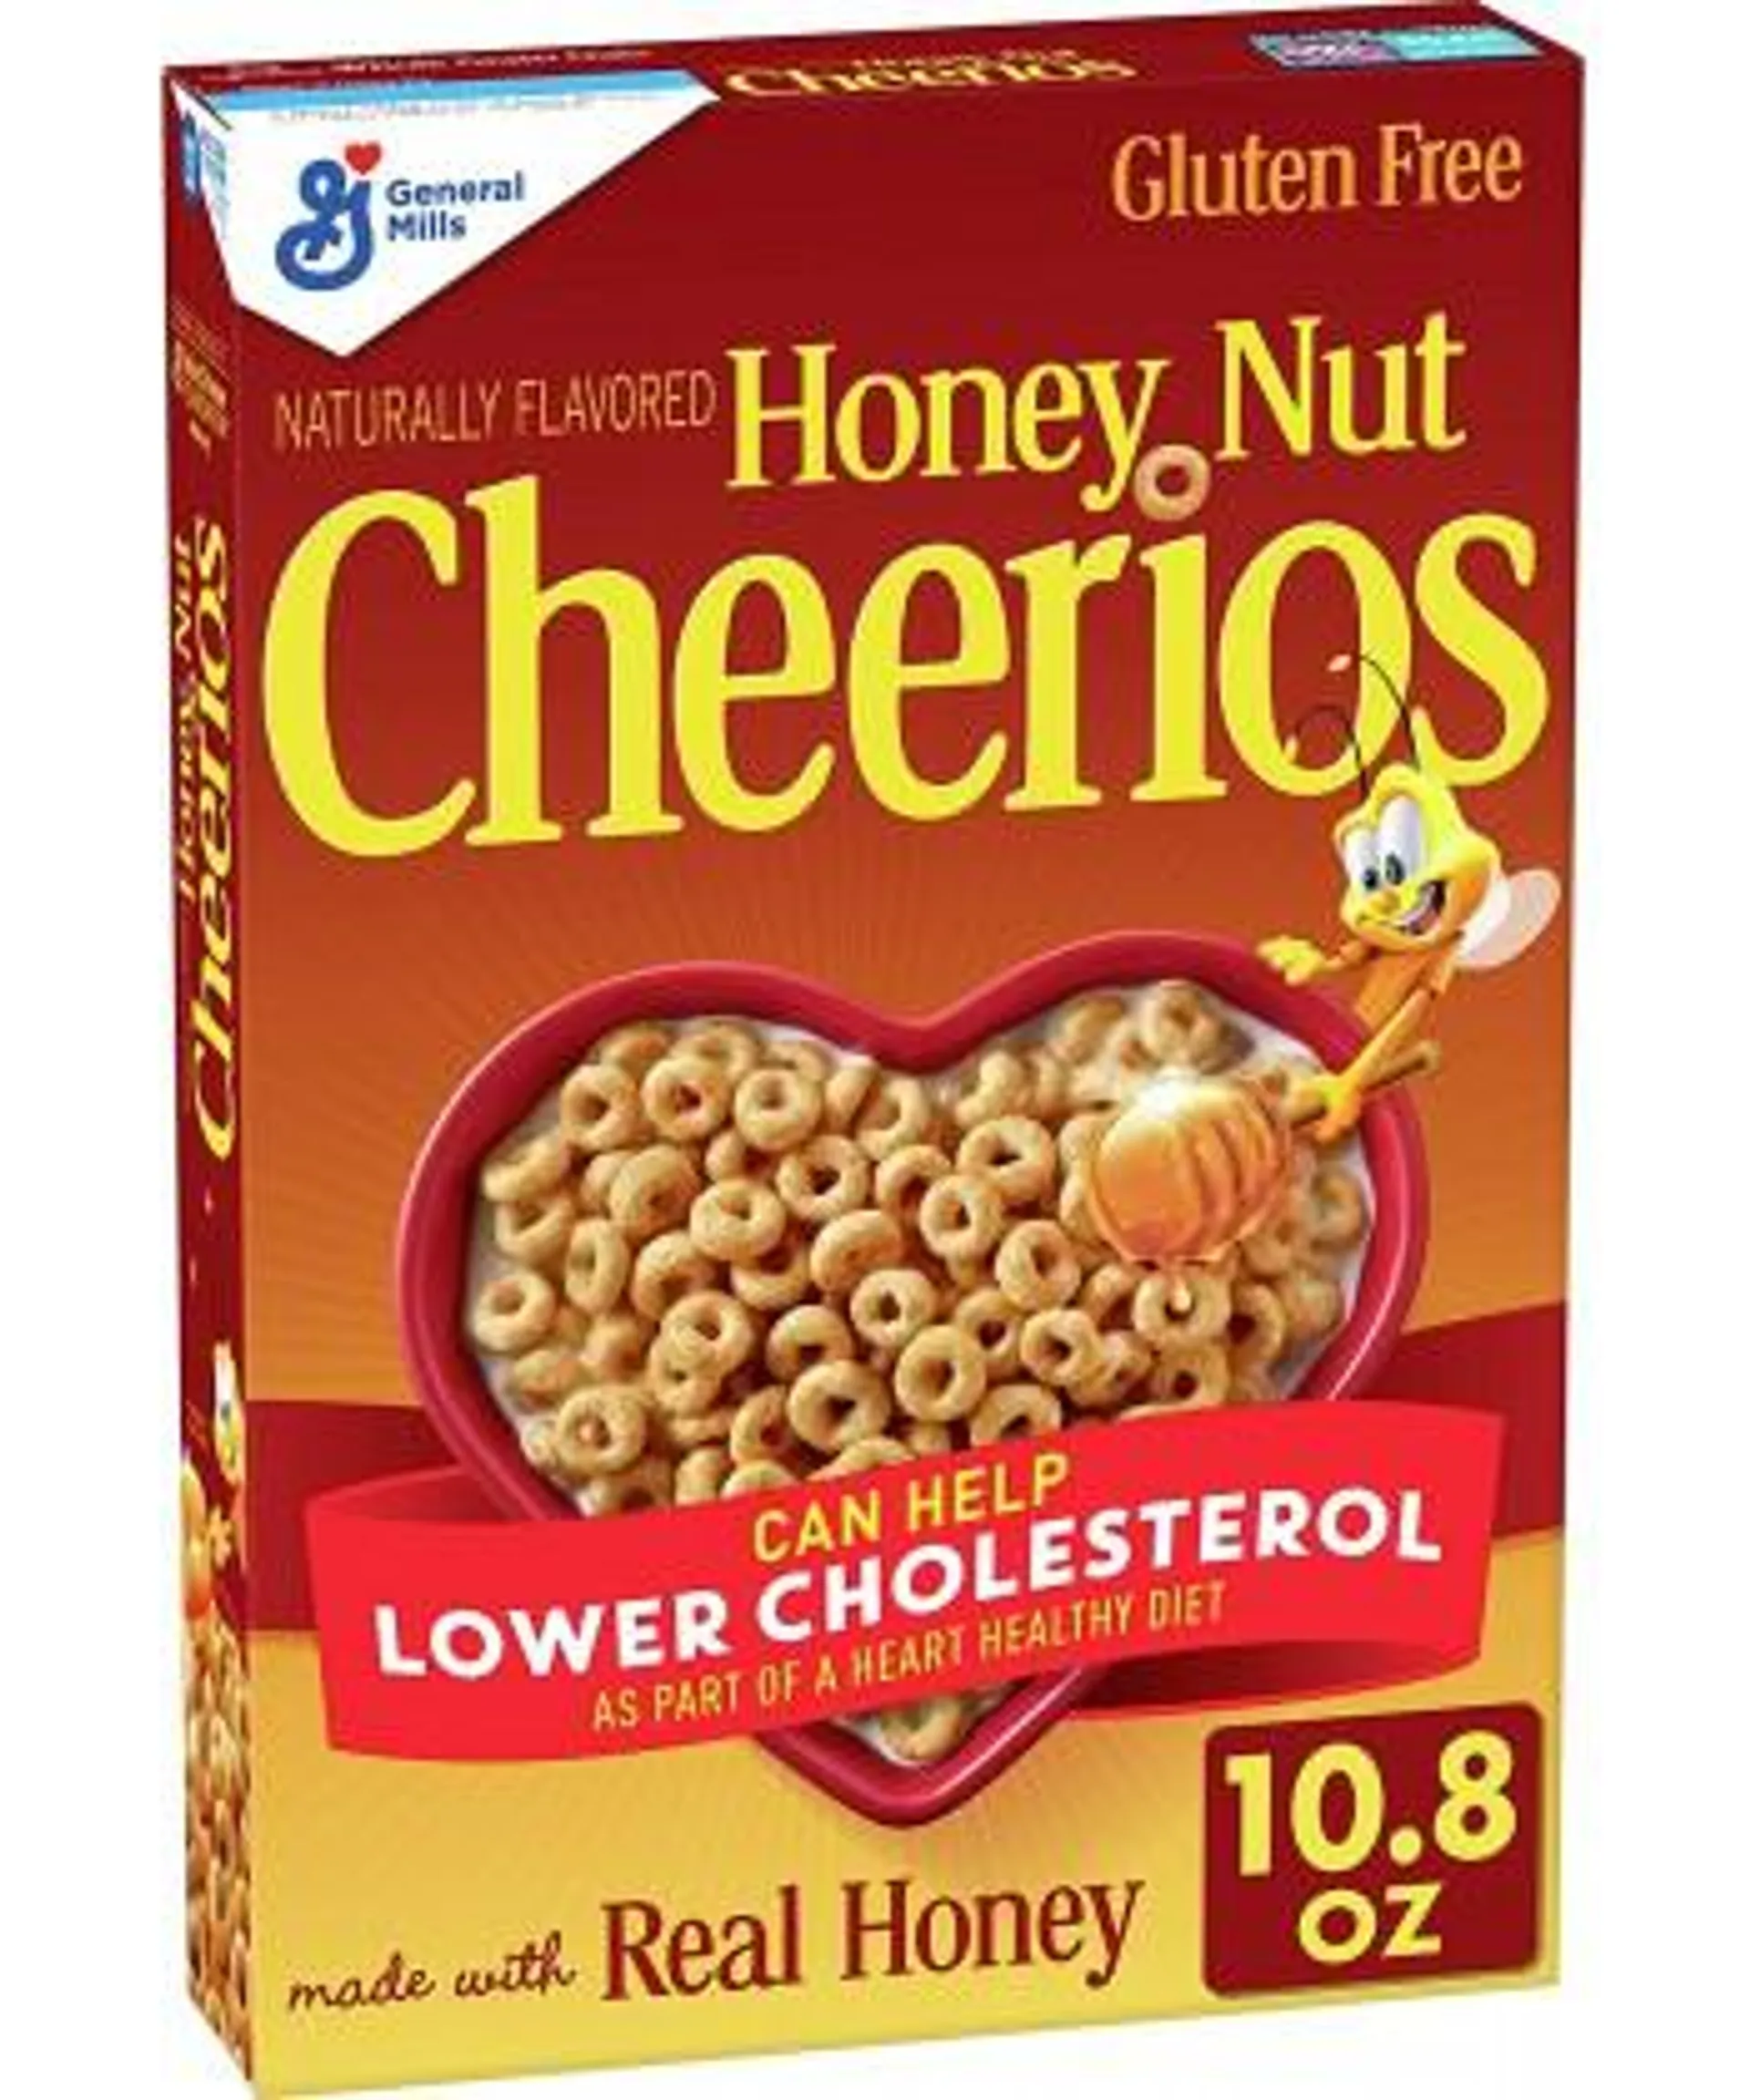 Cheerios Honey Nut Whole Grain Oats 306 gr. General Mills